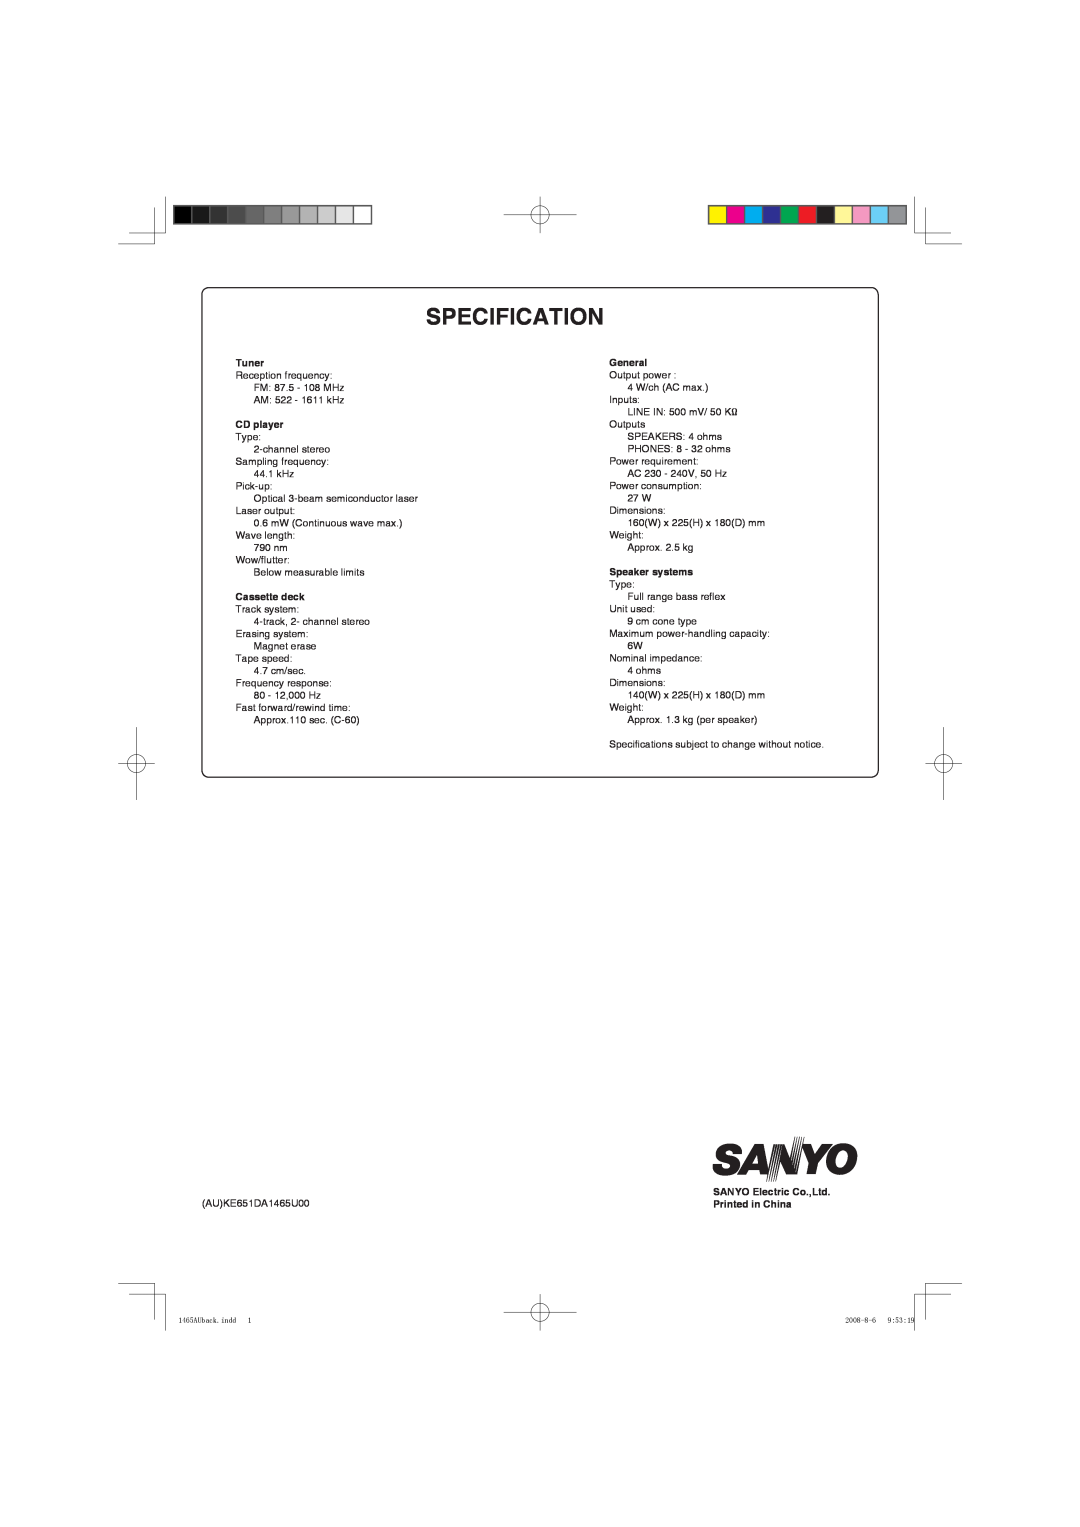 Sanyo DC-DA1465M Specification, Tuner, General, CD player, Speaker systems, Cassette deck, AUKE651DA1465U00 